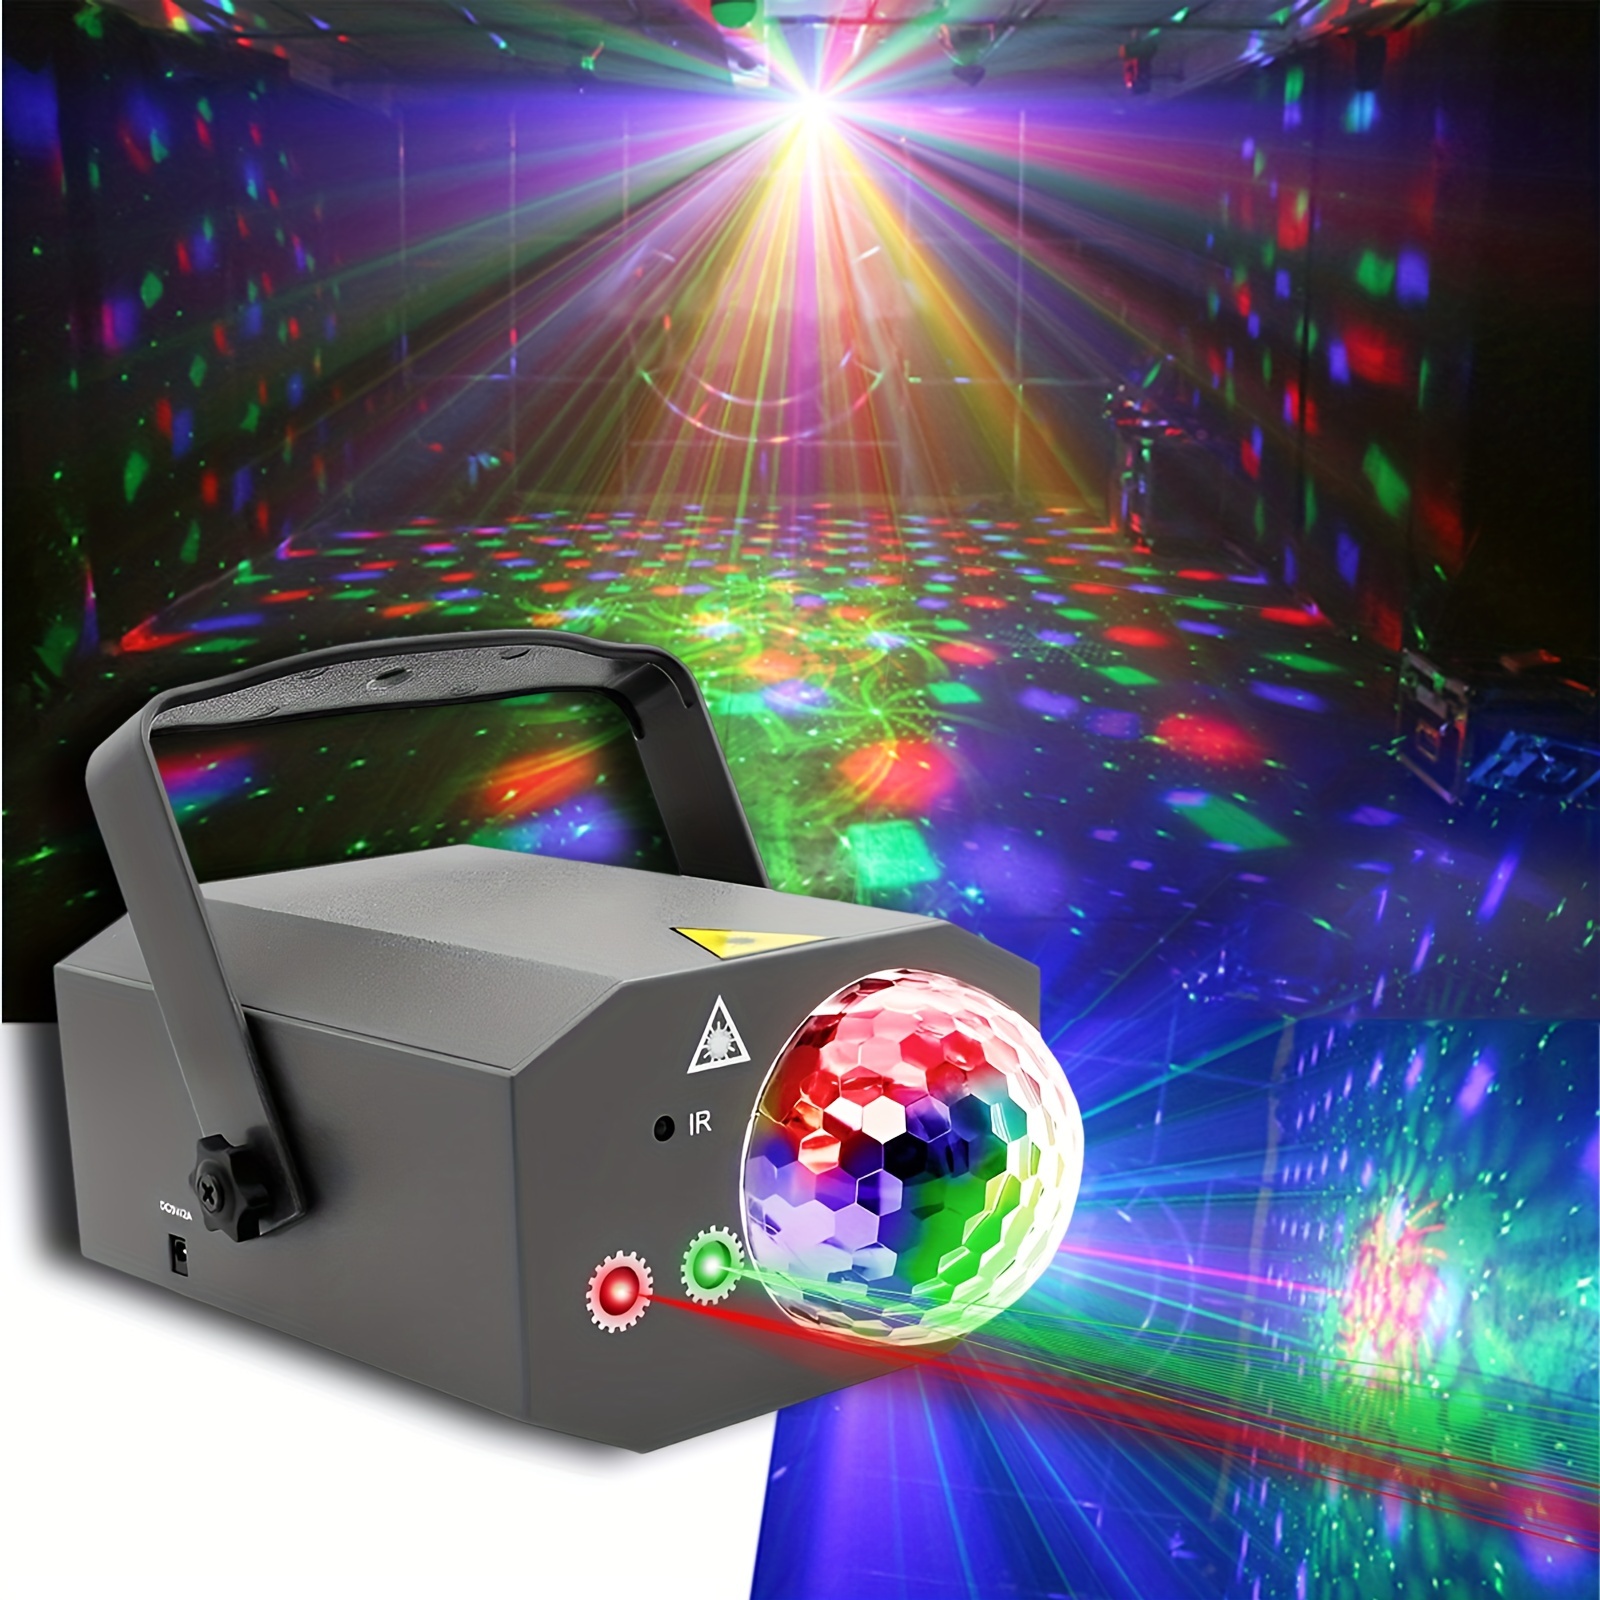 Acquista Proiettore per interni auto Luce DJ RGB Luci d'atmosfera Musica  colorata USB Party Karaoke Luce Mini proiezione Luce ambientale